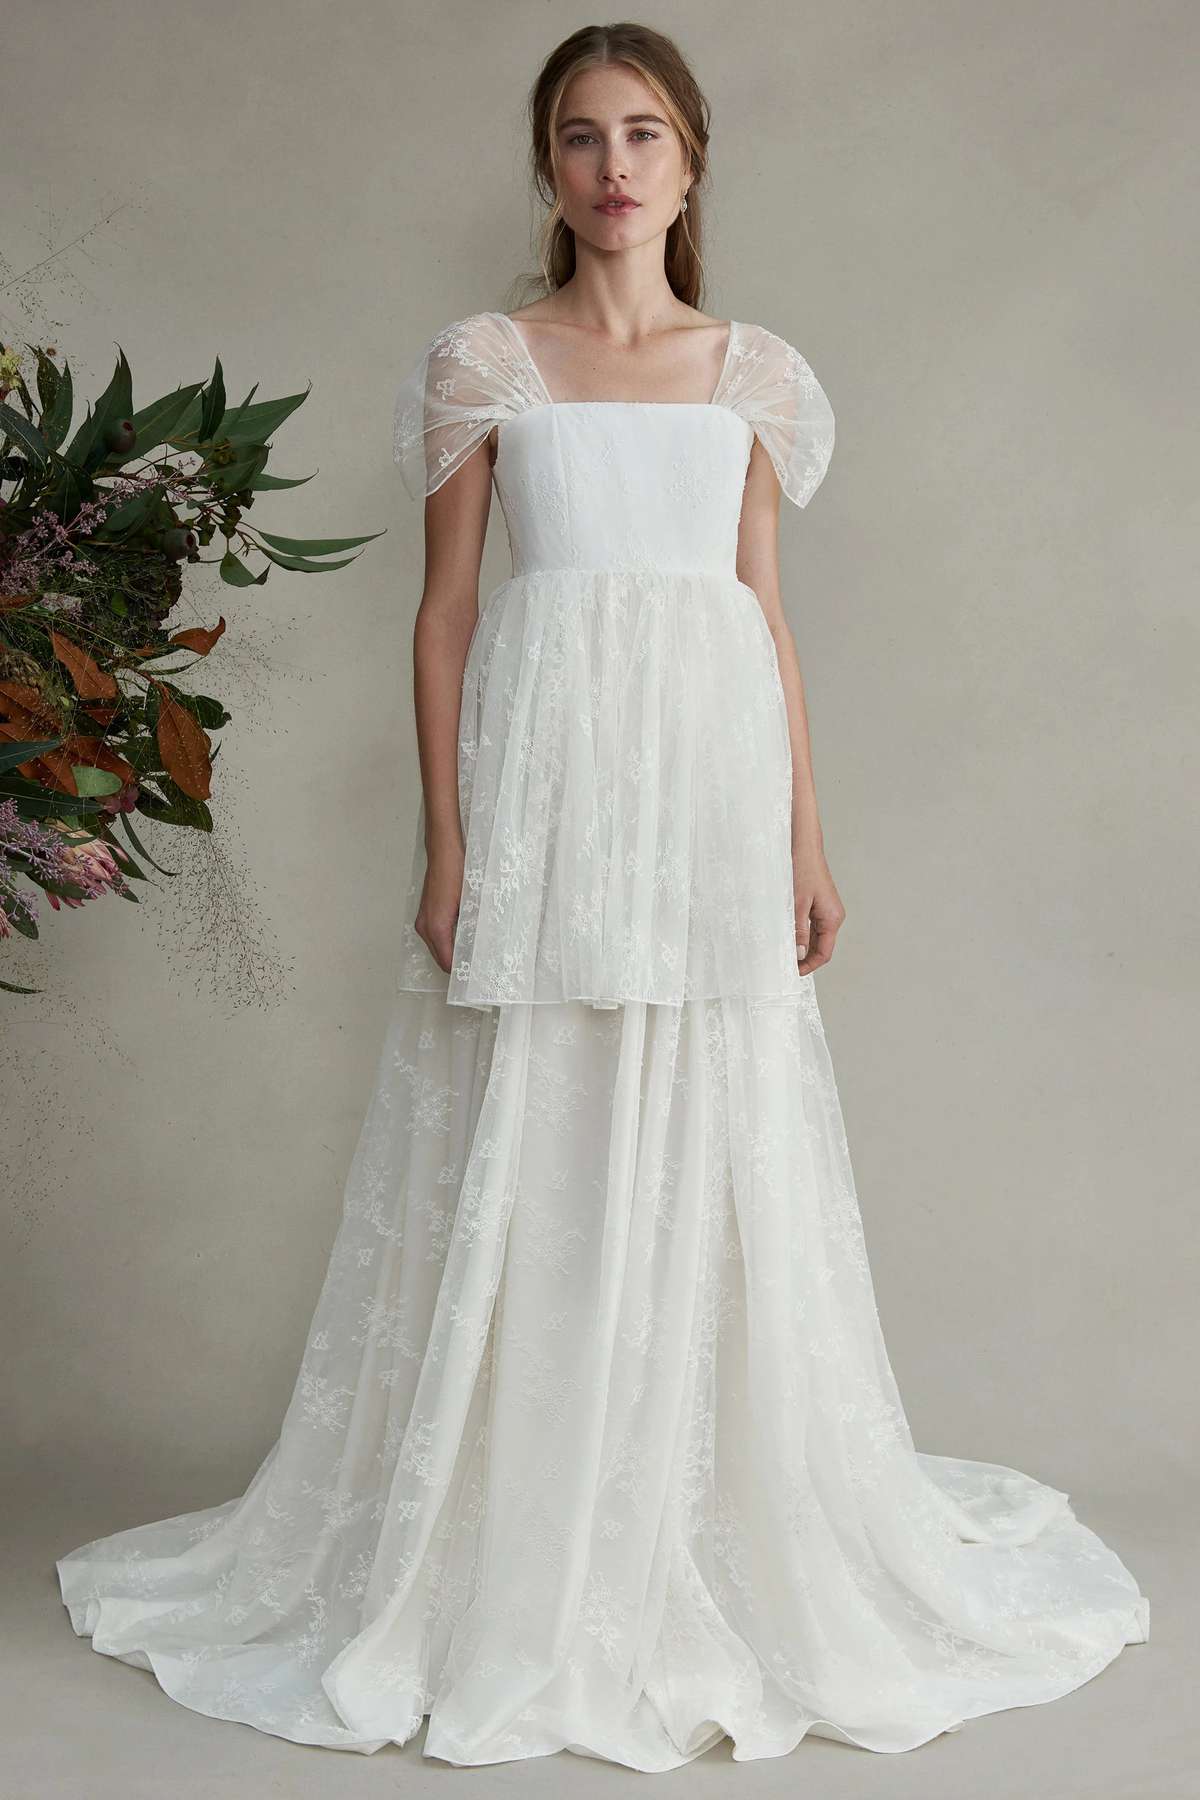 Tiered regency-era wedding gown